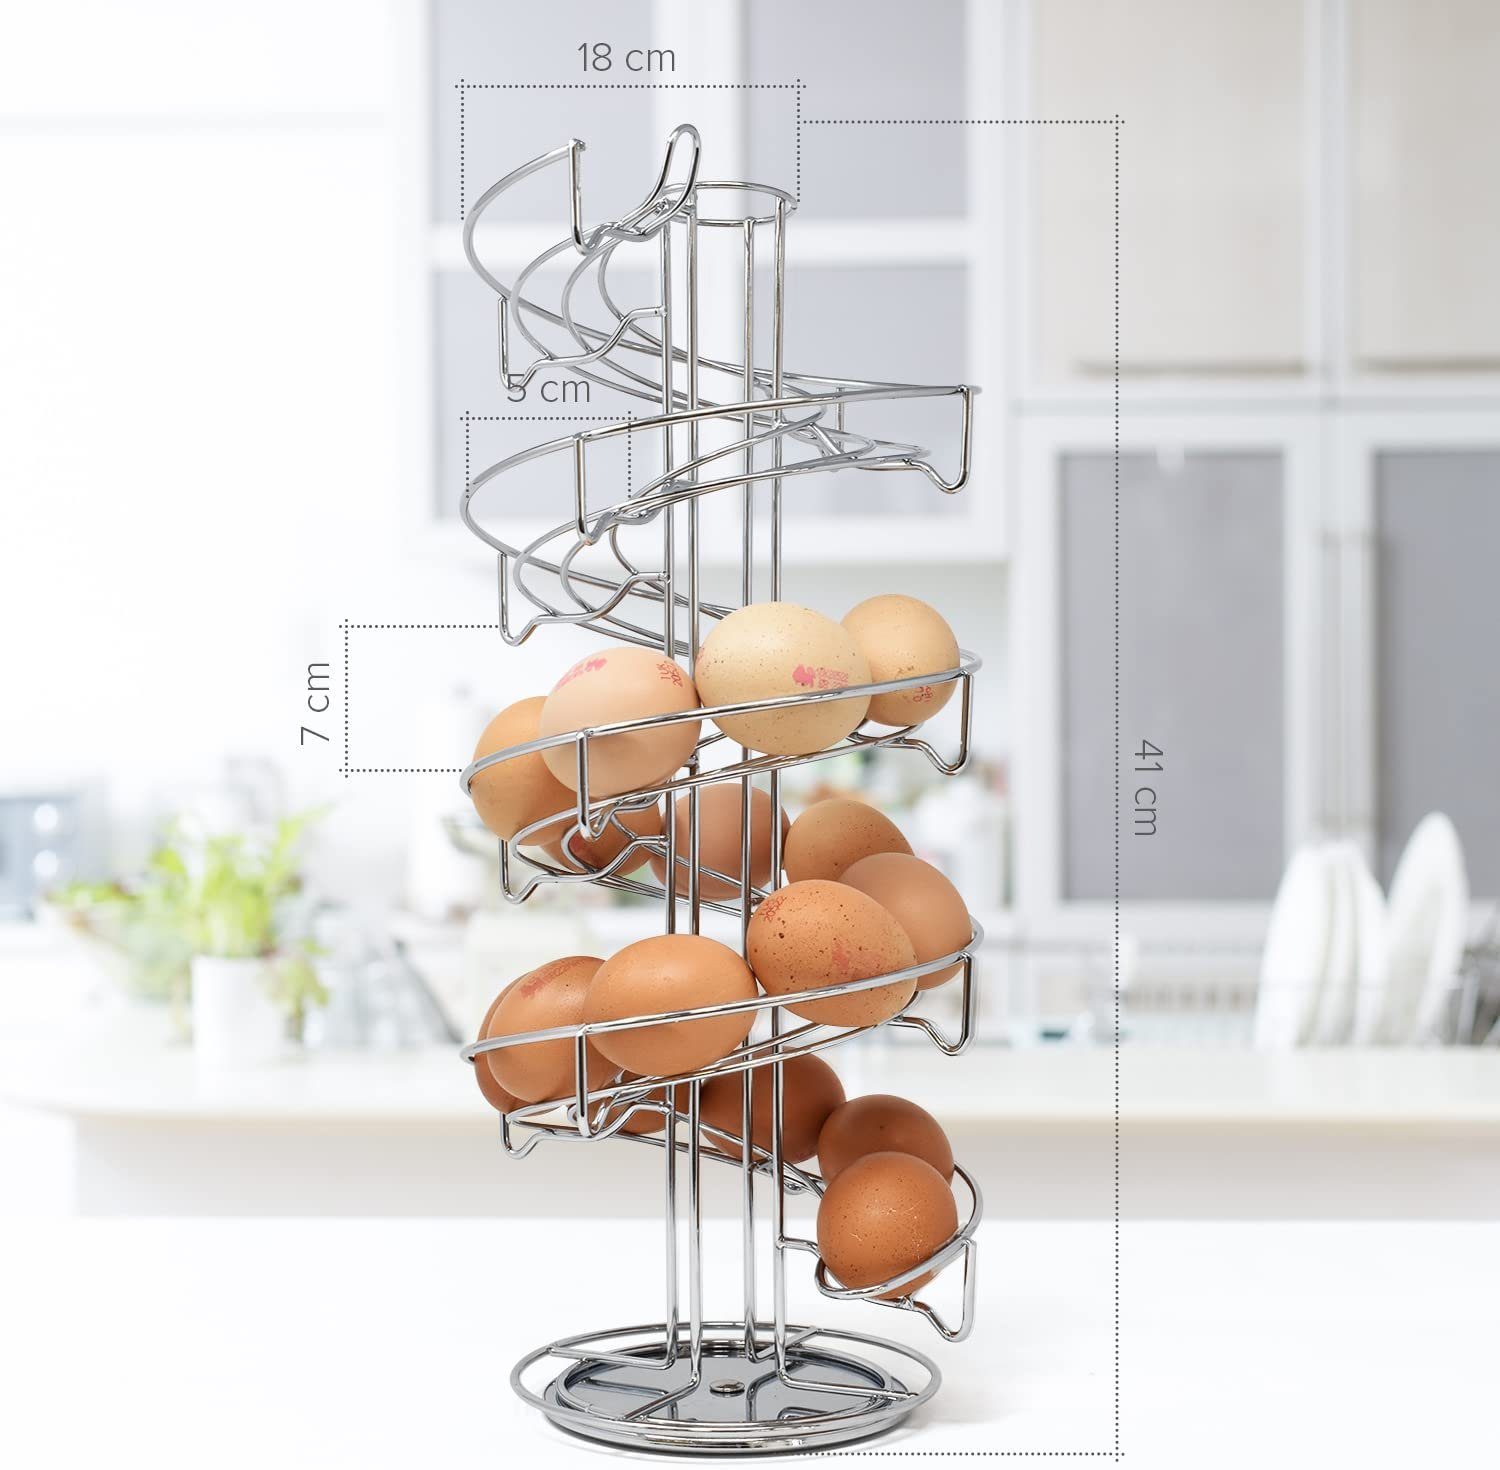 JOEJI’S KITCHEN Eierkorb Eierbehälter in Chrome Eierspirale Chrom Eierbecher Eierhalter Eieraufbewahrung